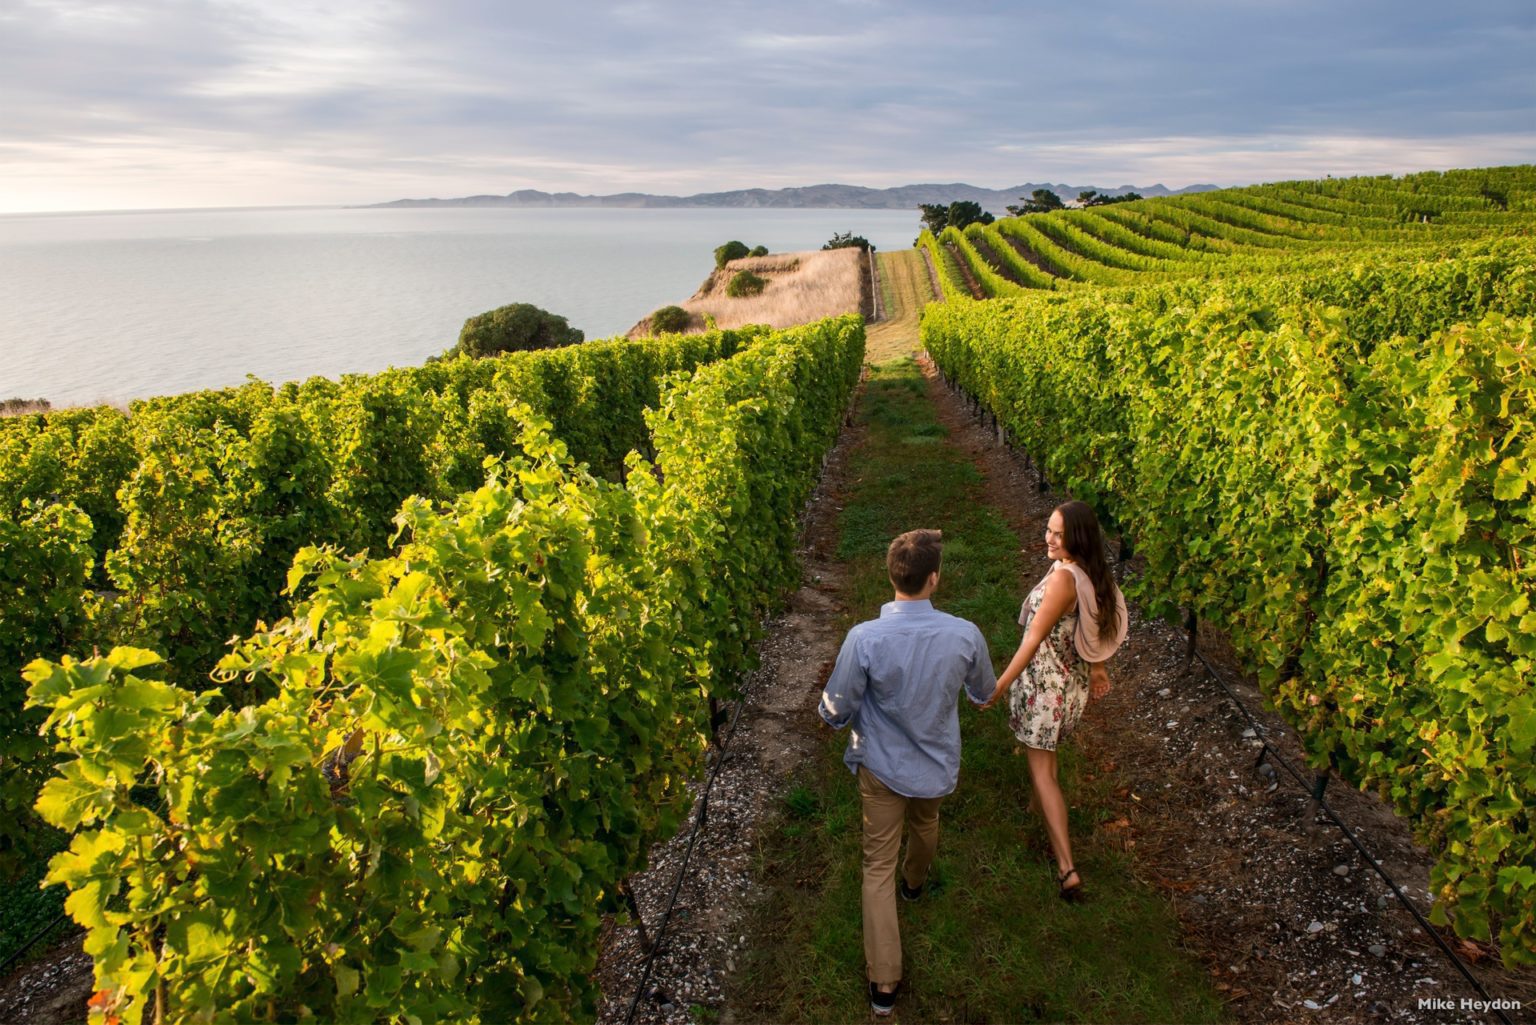 Blenheim Marlborough couple exploring vineyard on New Zealand's South Island tour